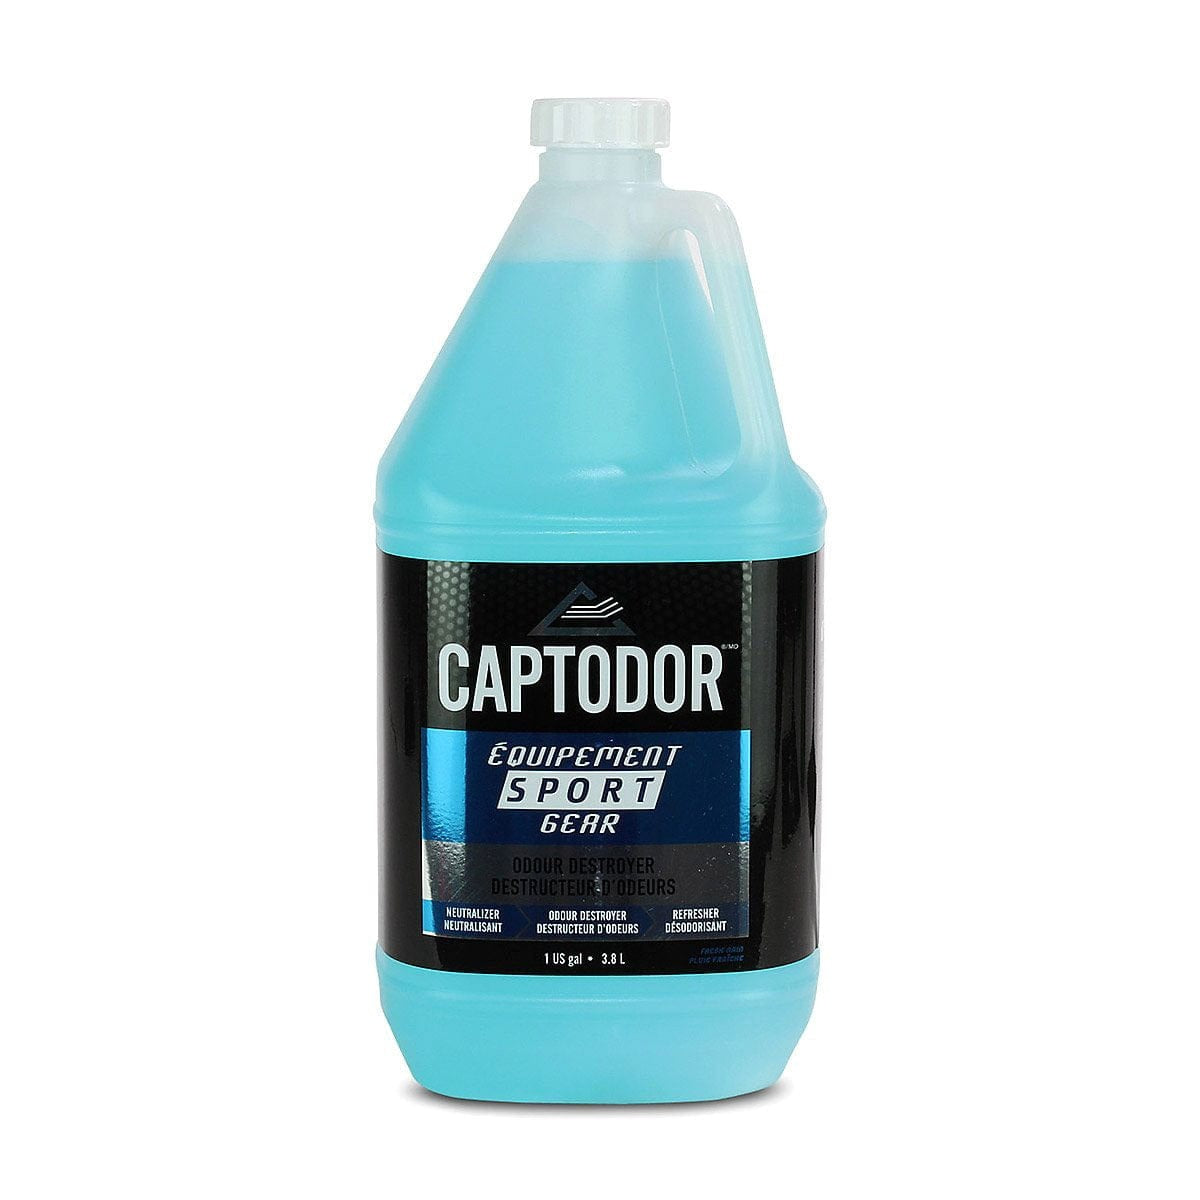 Captodor Deodorizer Spray - Refill Bottle